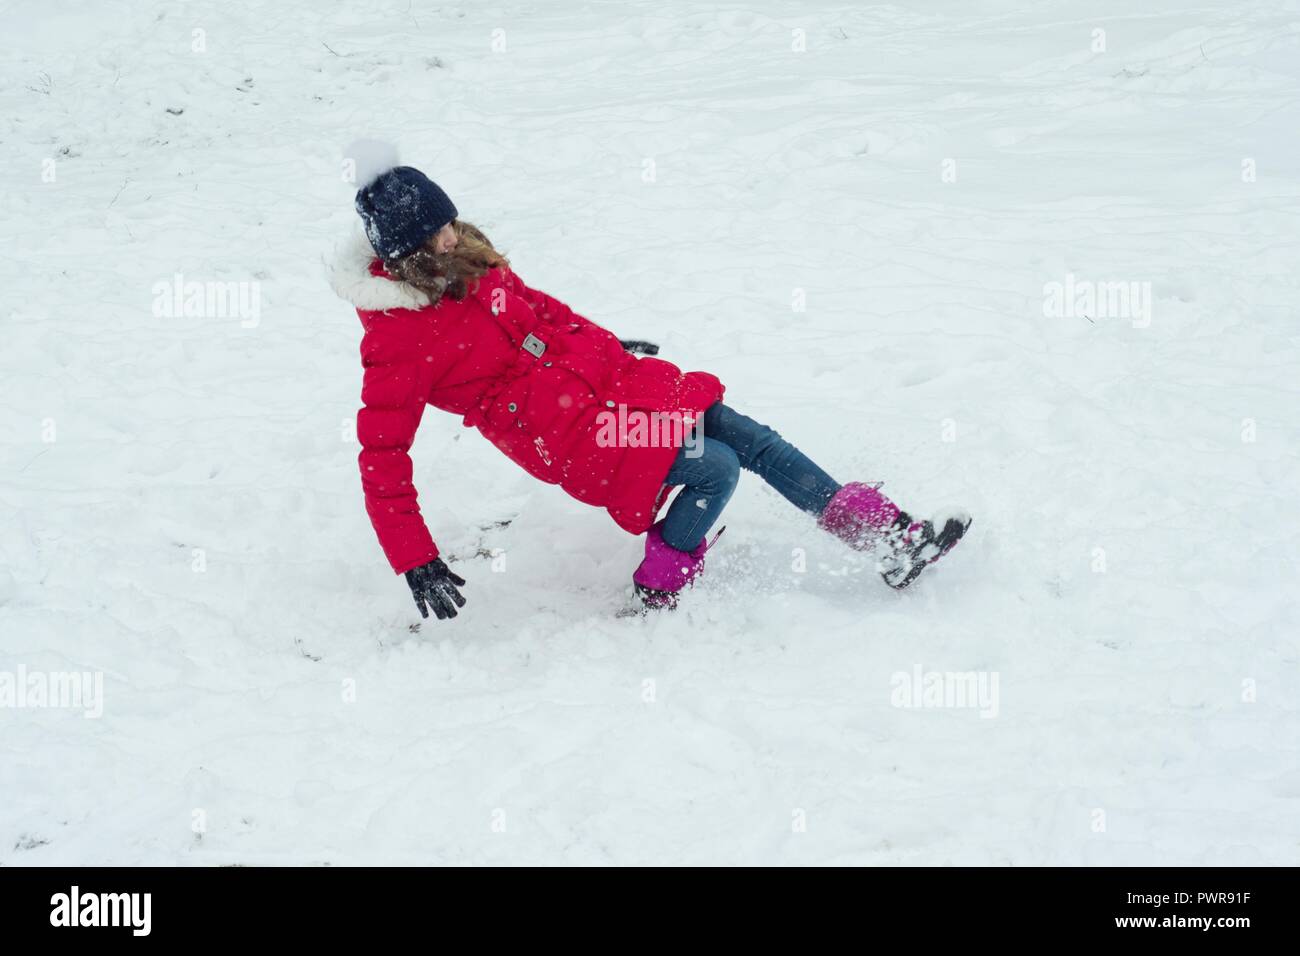 Winter danger, the girl slipped and falls. Stock Photo